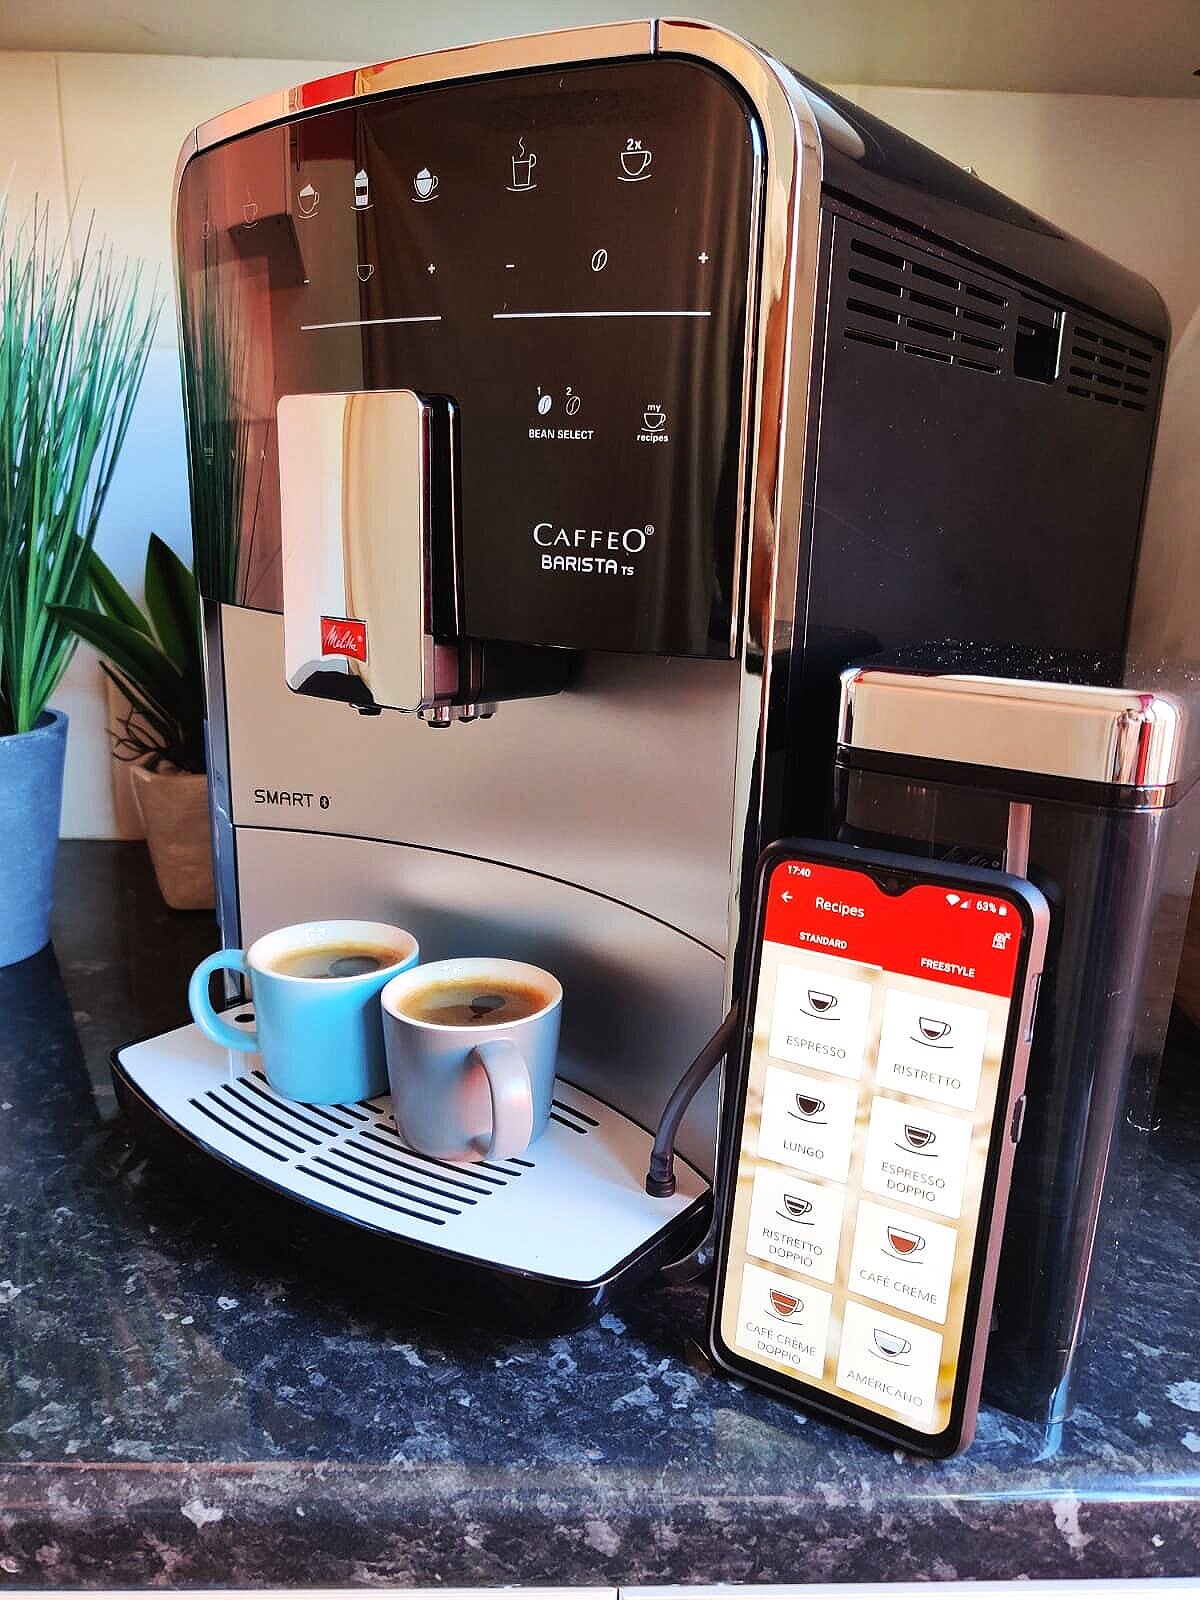 Melitta Caffeo Barista TS Smart review: The perfect coffee machine